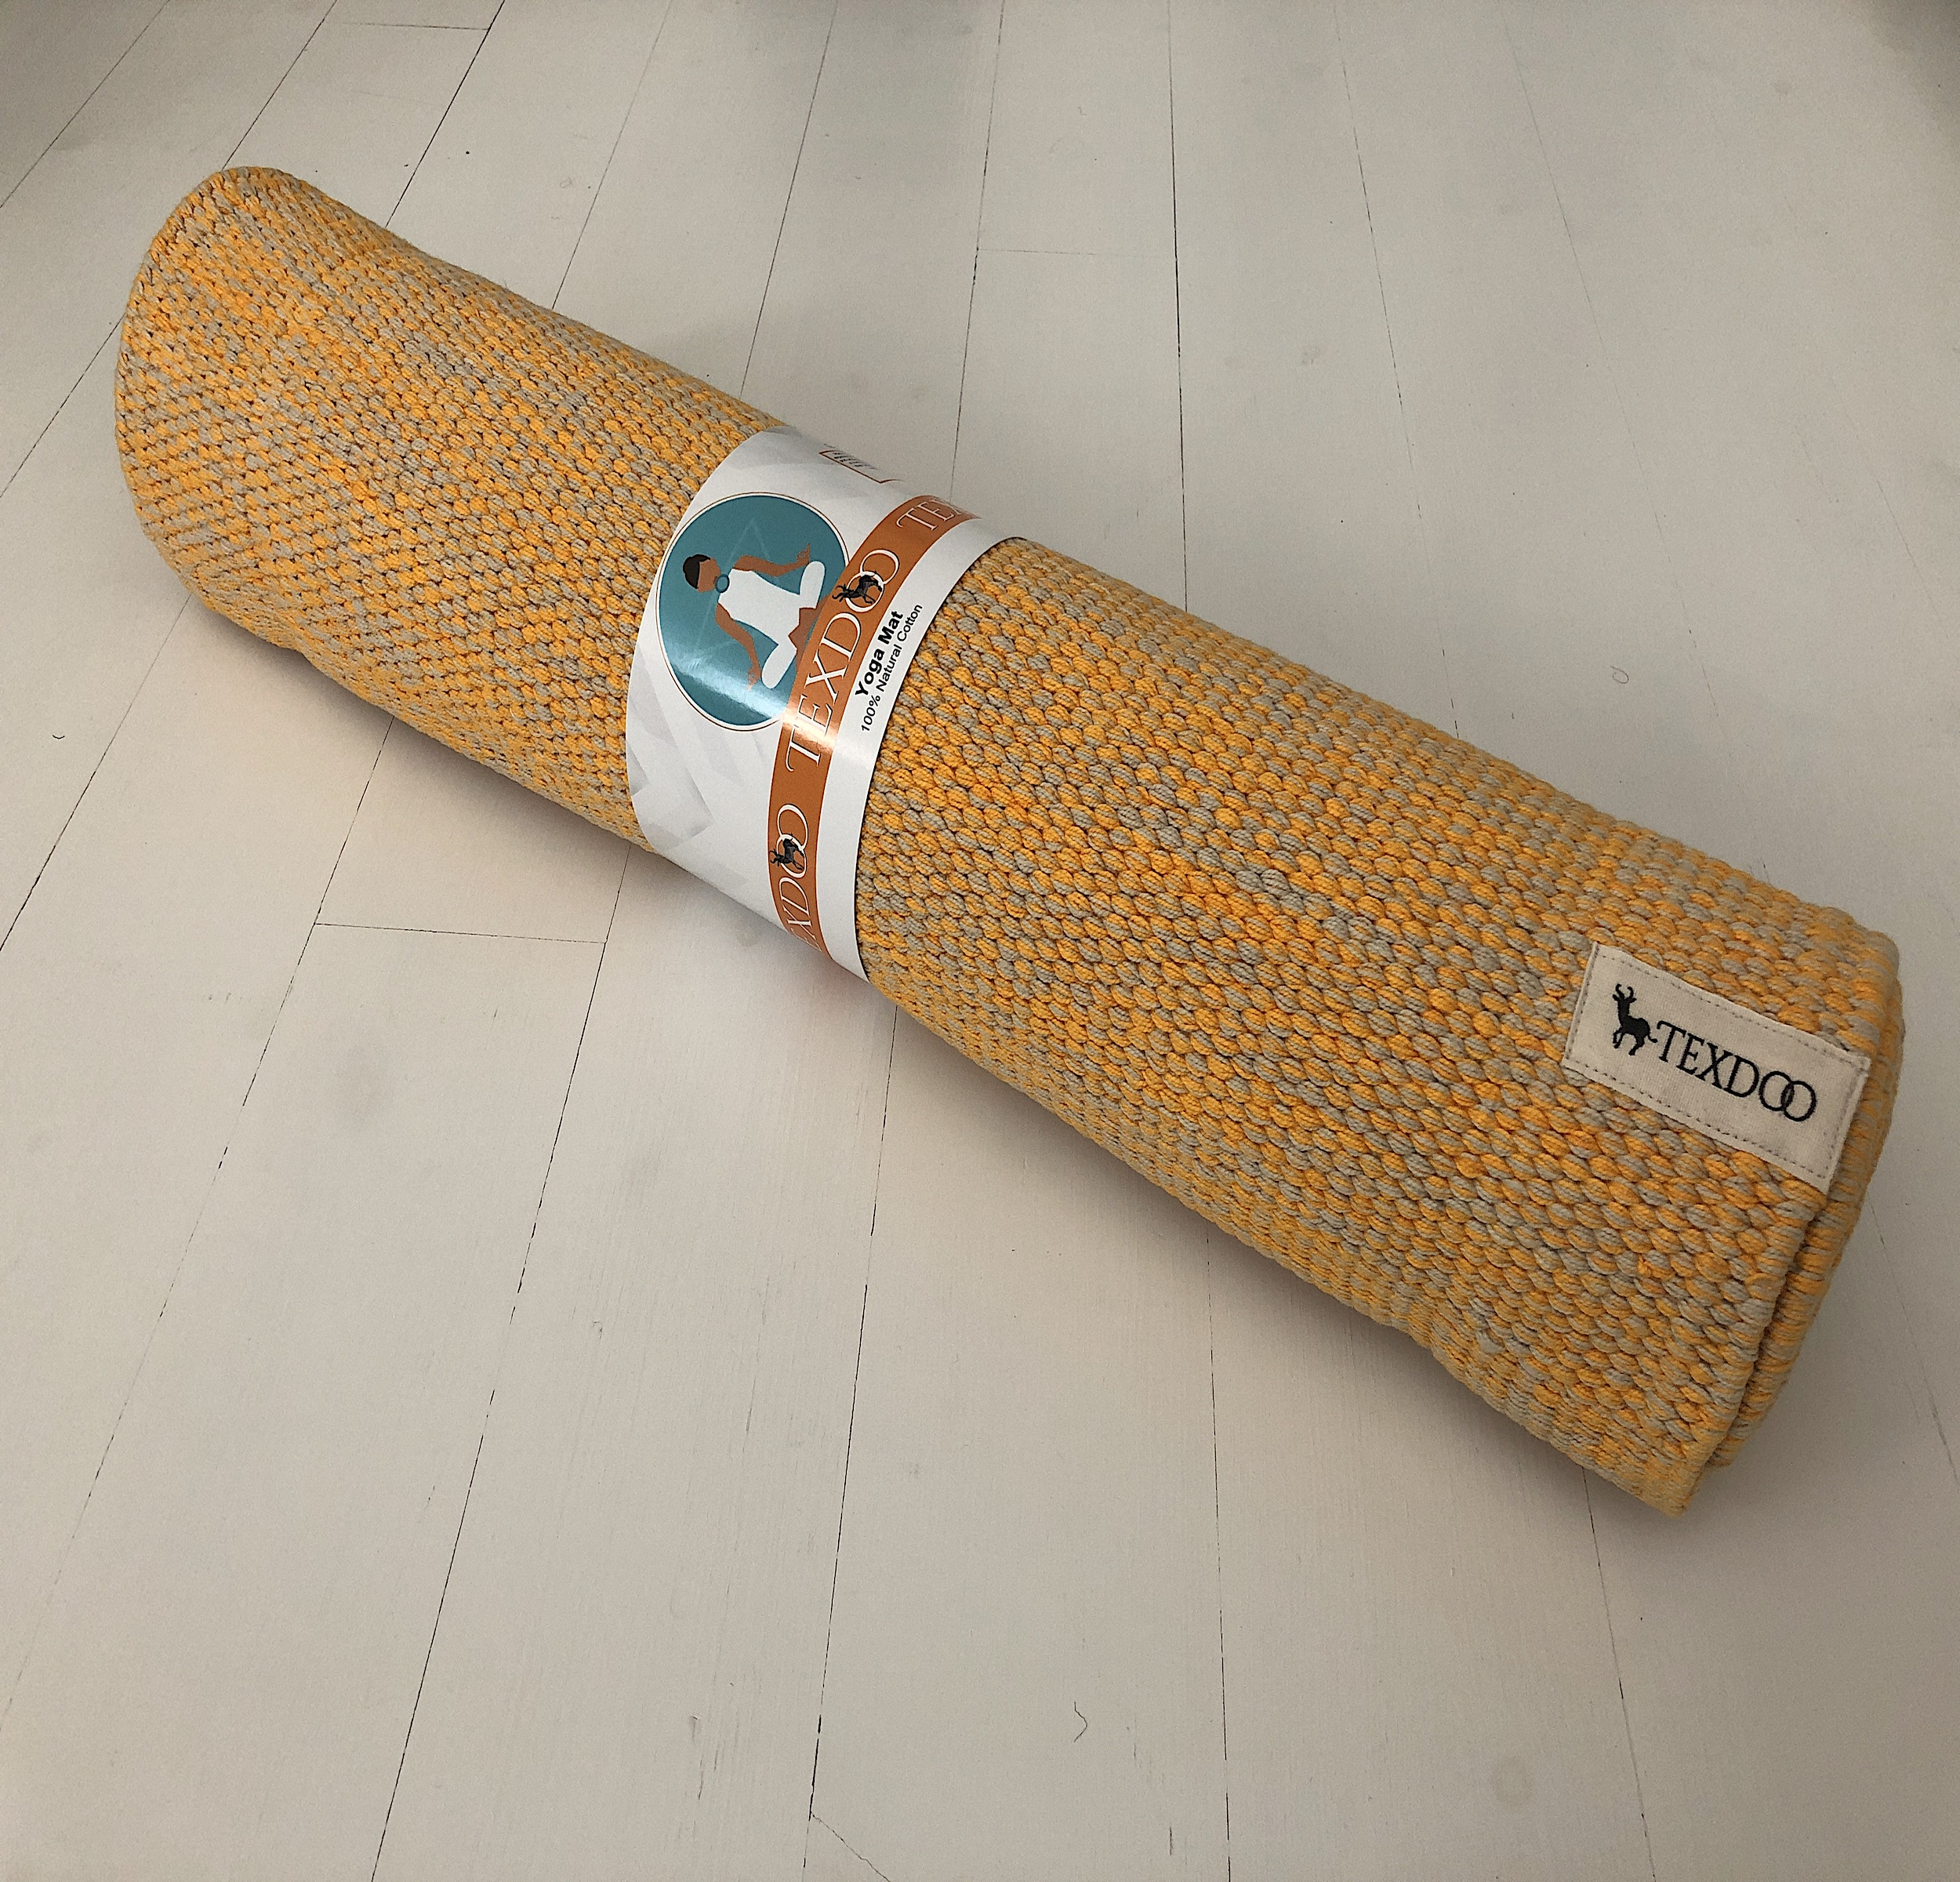 Handmade and eco-friendly cotton yoga mats - Shipping across Europe